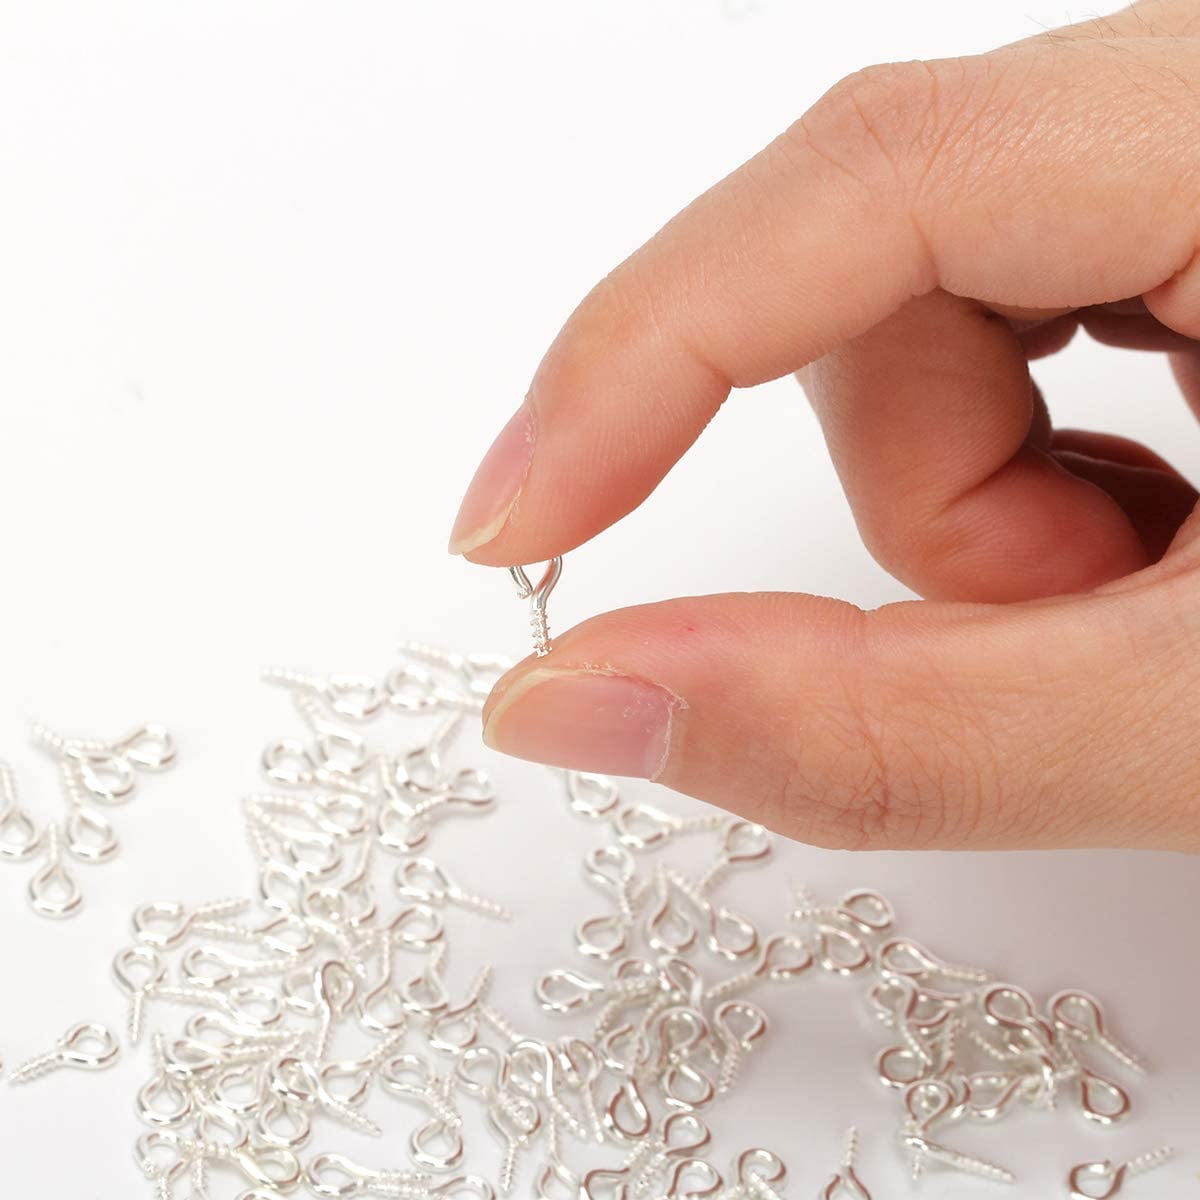 Silver Screw Eye Pins, Peg Hooks (10 x 4.5 mm, 500 Pack) – Okuna